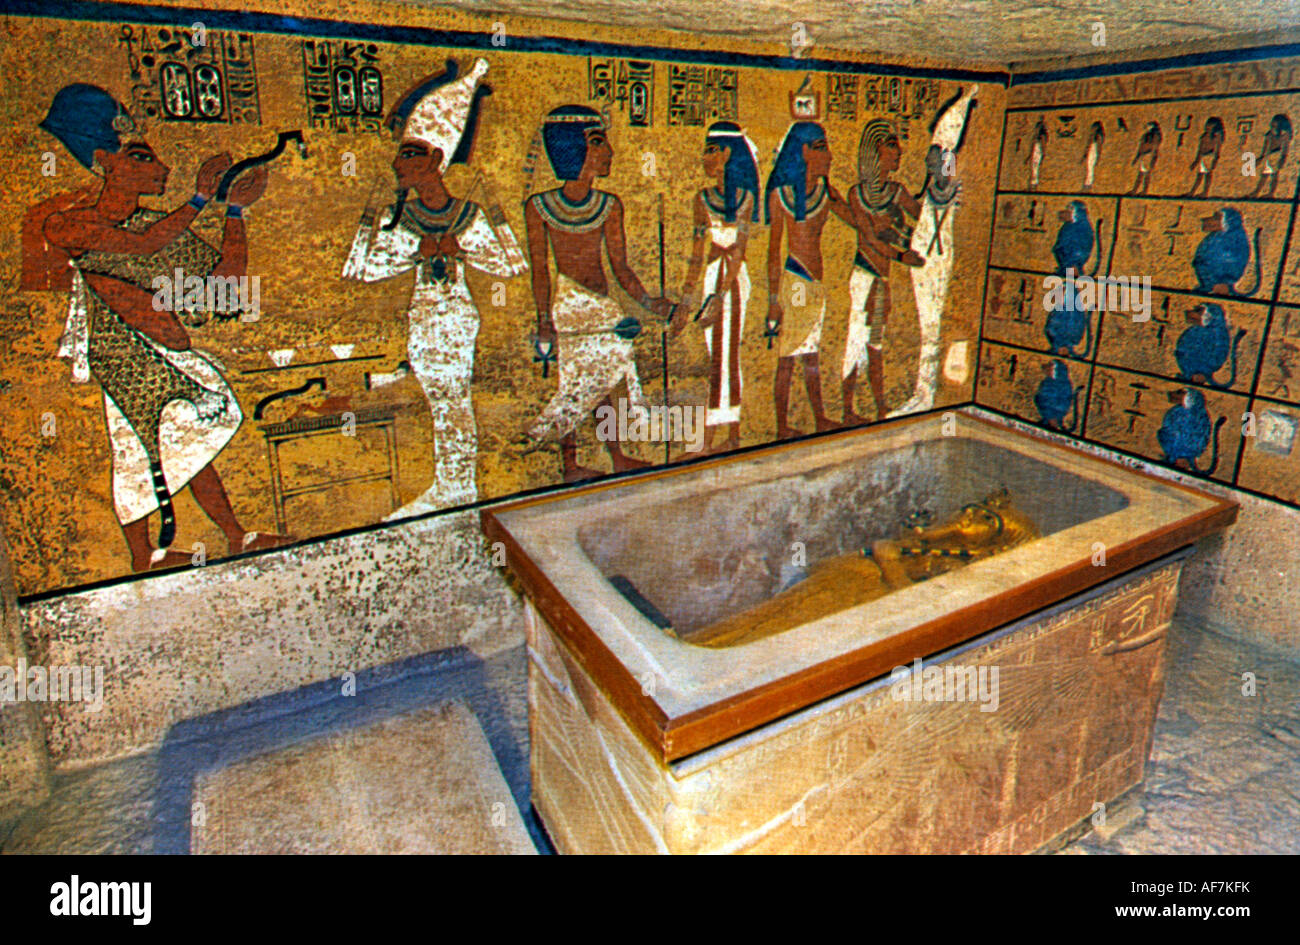 Egypt Tomb Of The Kings Mummy Of Tutankhamun In Golden Coffin Stock